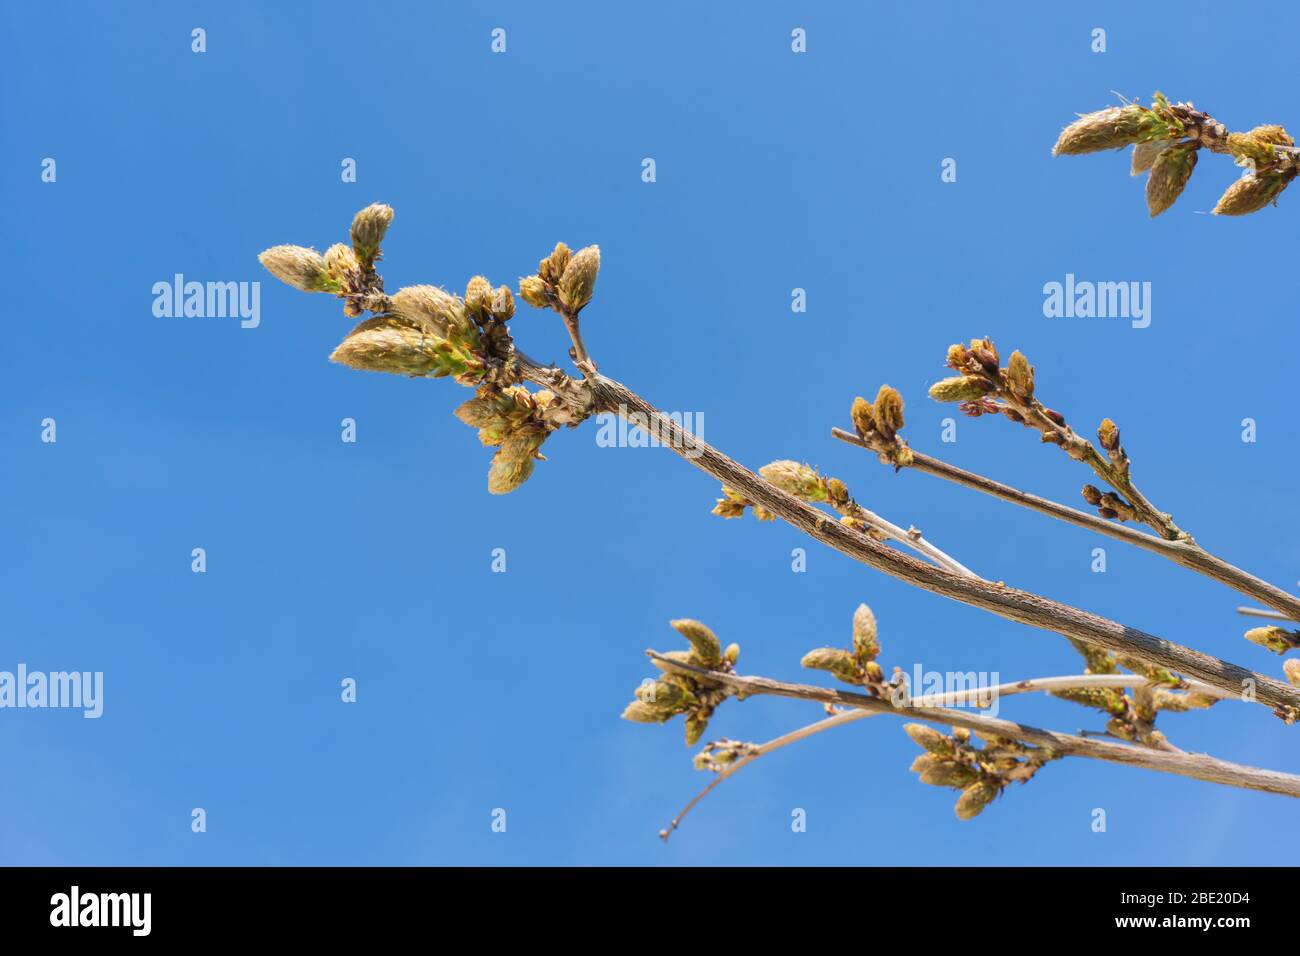 Wisteria flower buds against a plain blue sky background. UK Stock Photo